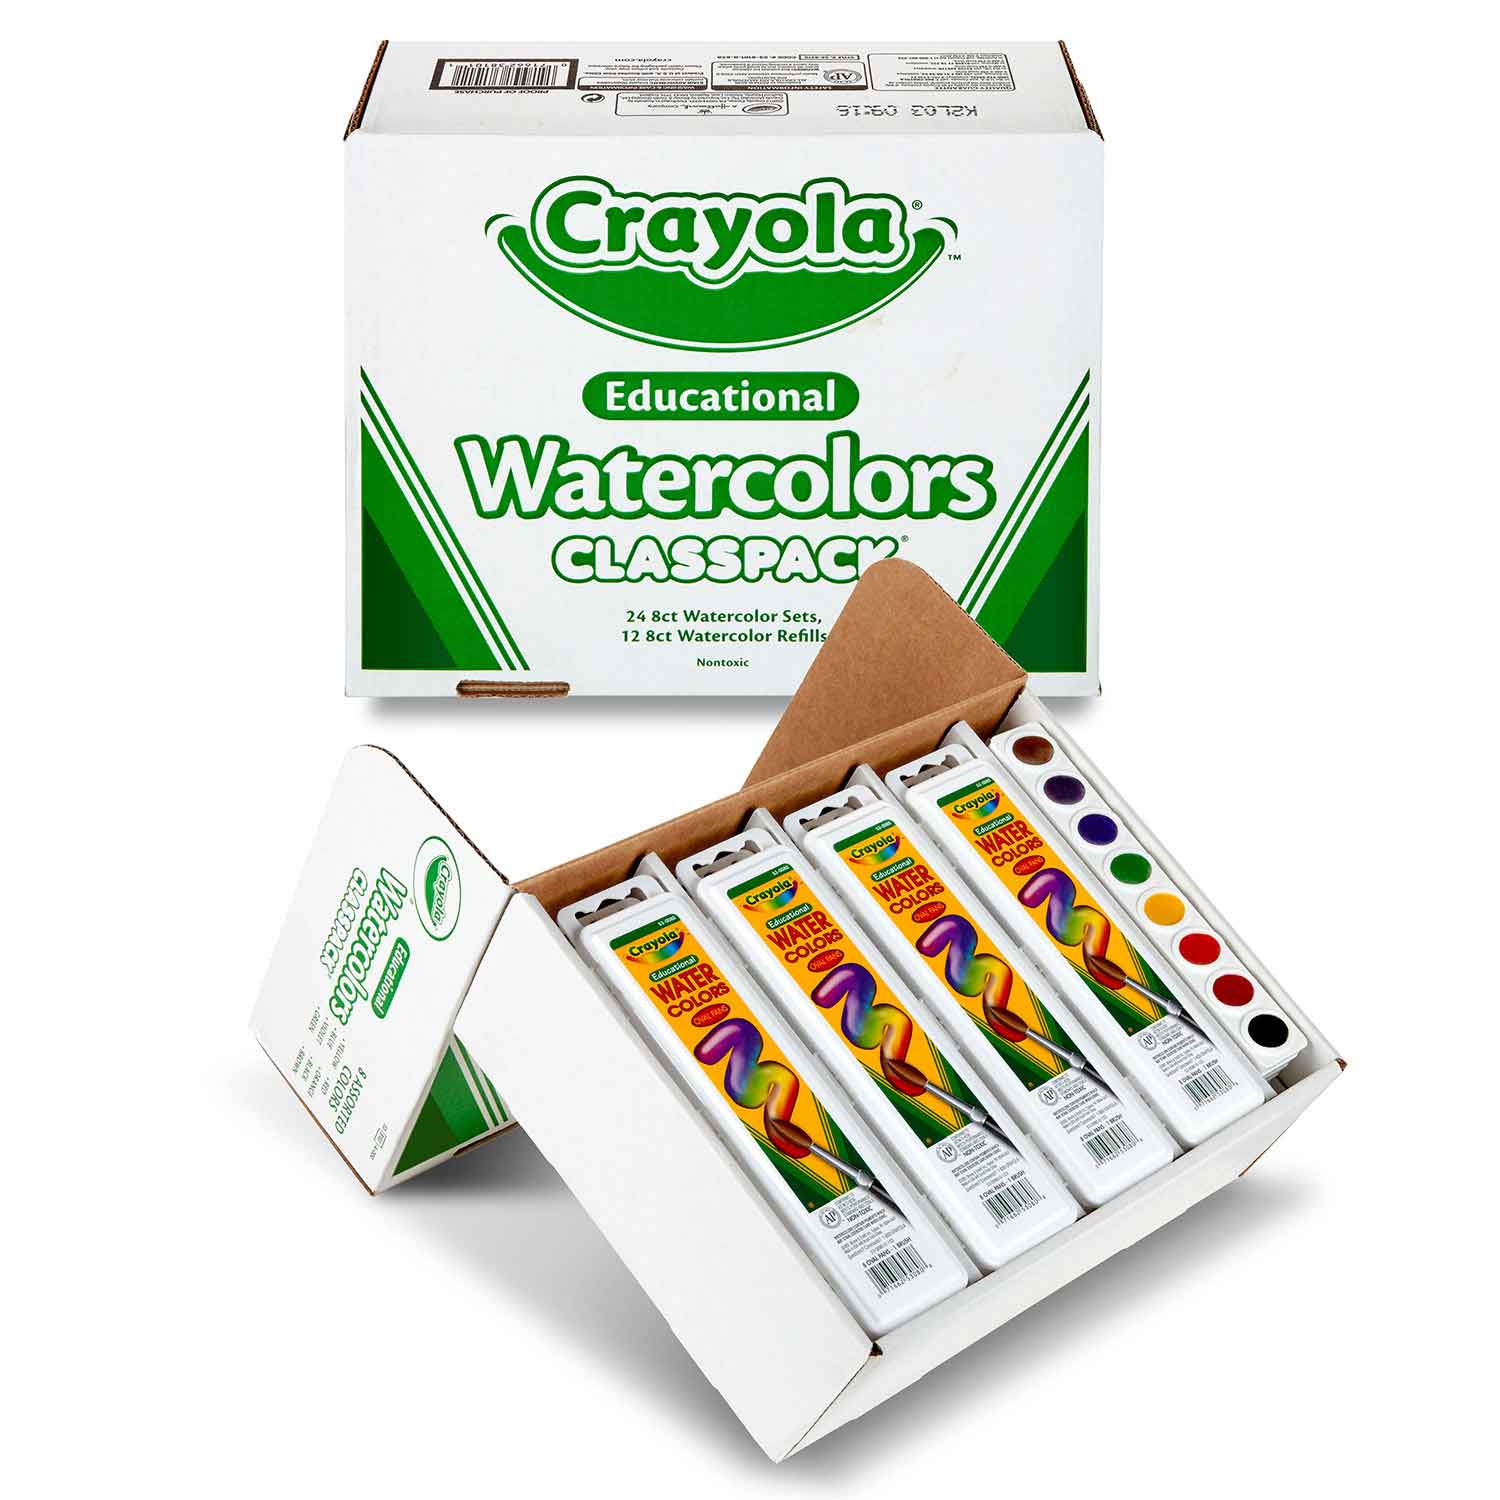 Crayola Crayons Bulk, 24 Box Classpack, 24 Assorted Colors